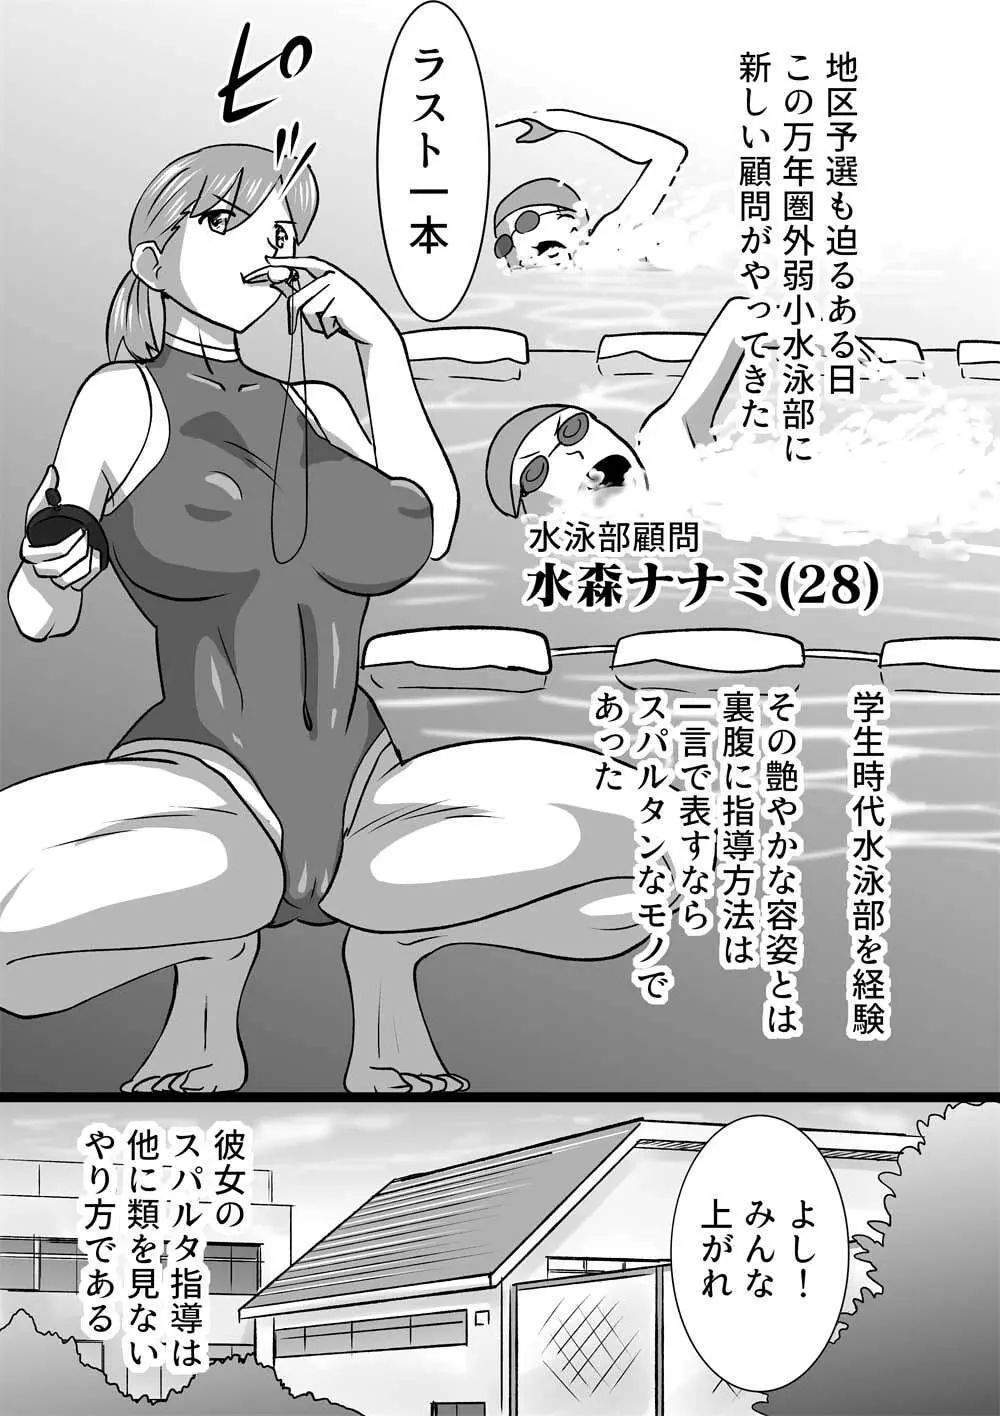 GO!GO!水泳部 -go go Swimming club- - page1